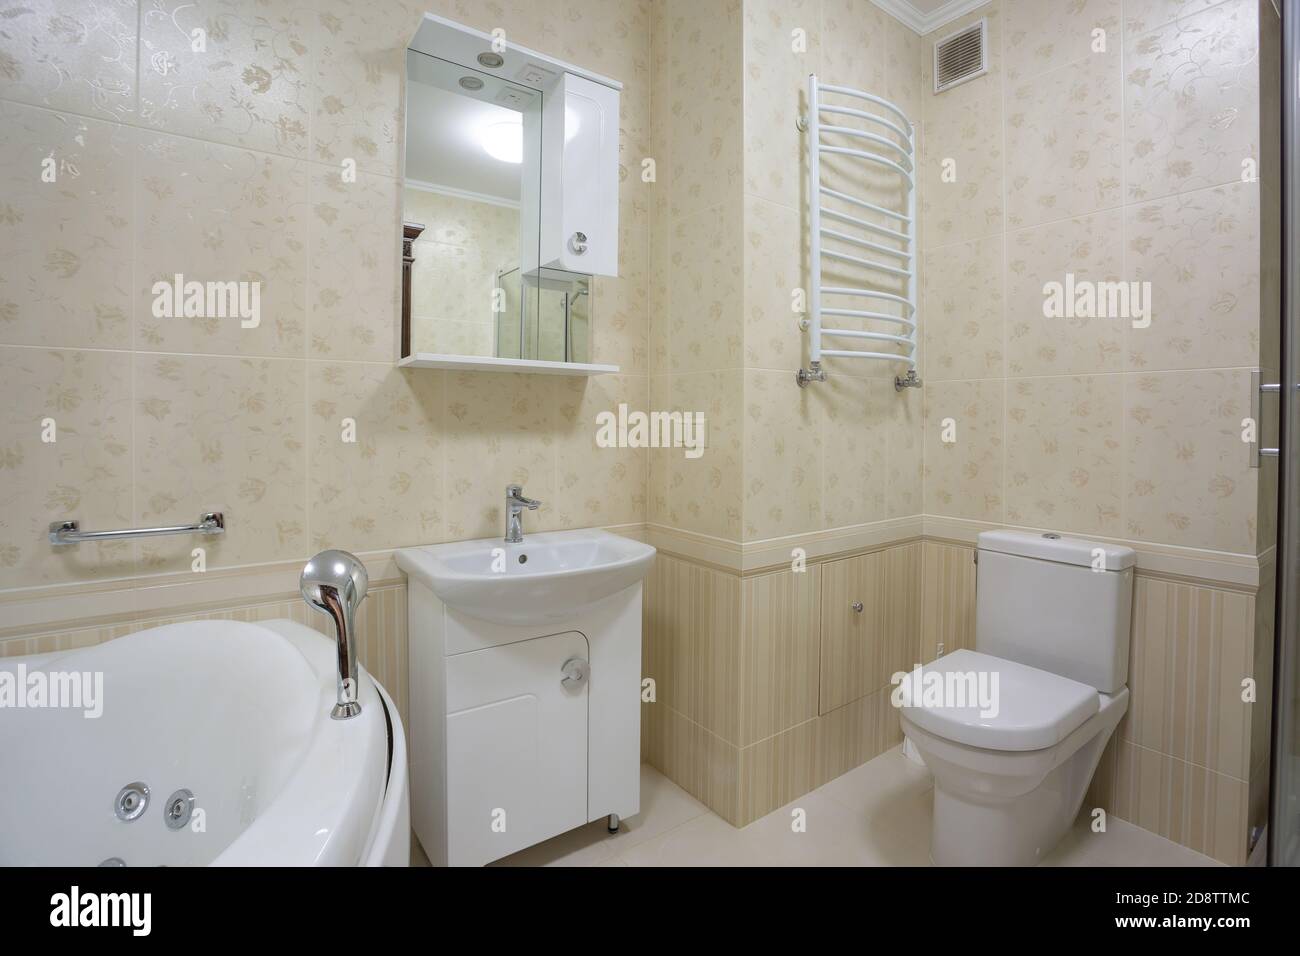 https://c8.alamy.com/comp/2D8TTMC/modern-bathroom-with-jacuzzi-bath-2D8TTMC.jpg